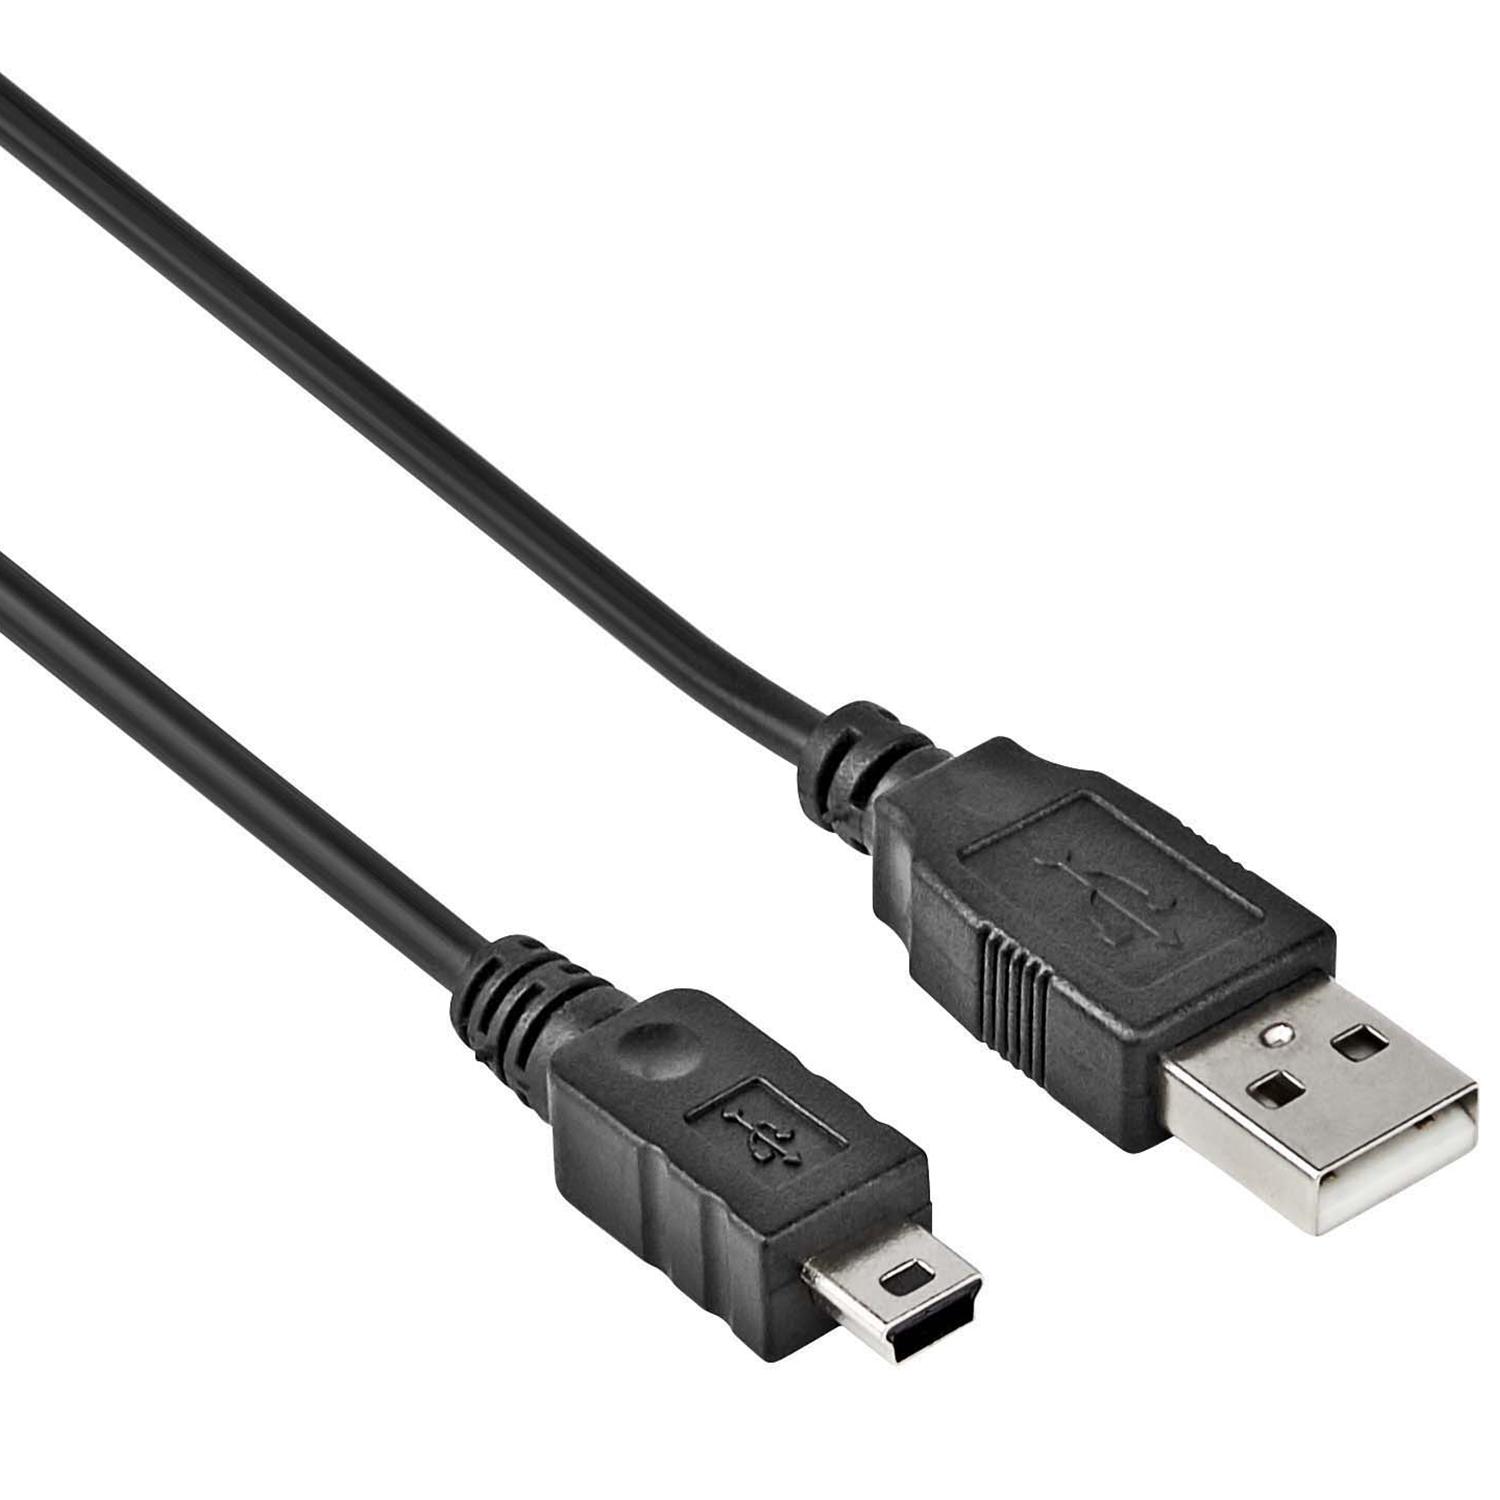 Mini-USB-Kabel - Allteq